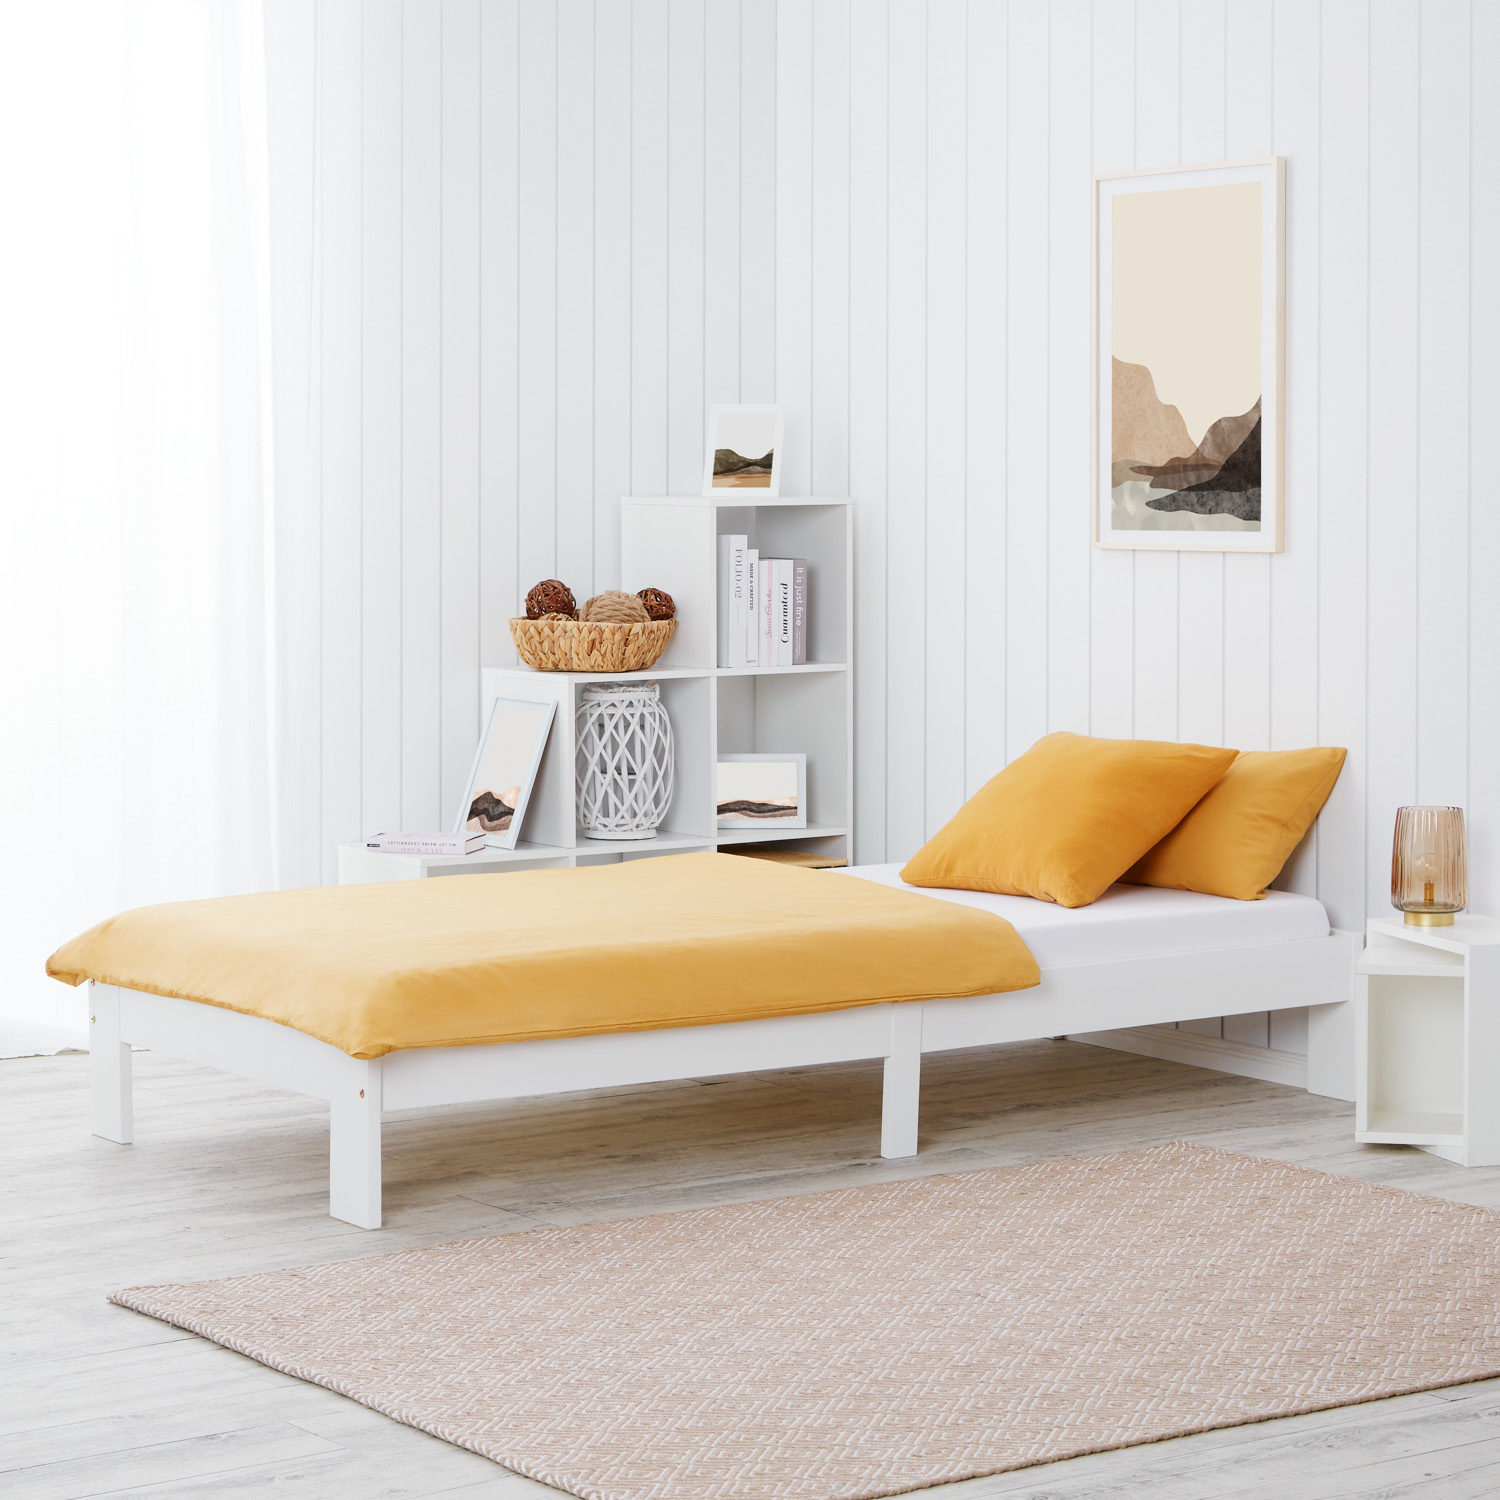 Einzelbett 90x200 cm mit Lattenrost Holzbett Weiß Futonbett Kiefer Bett Bettgestell Holz Massiv